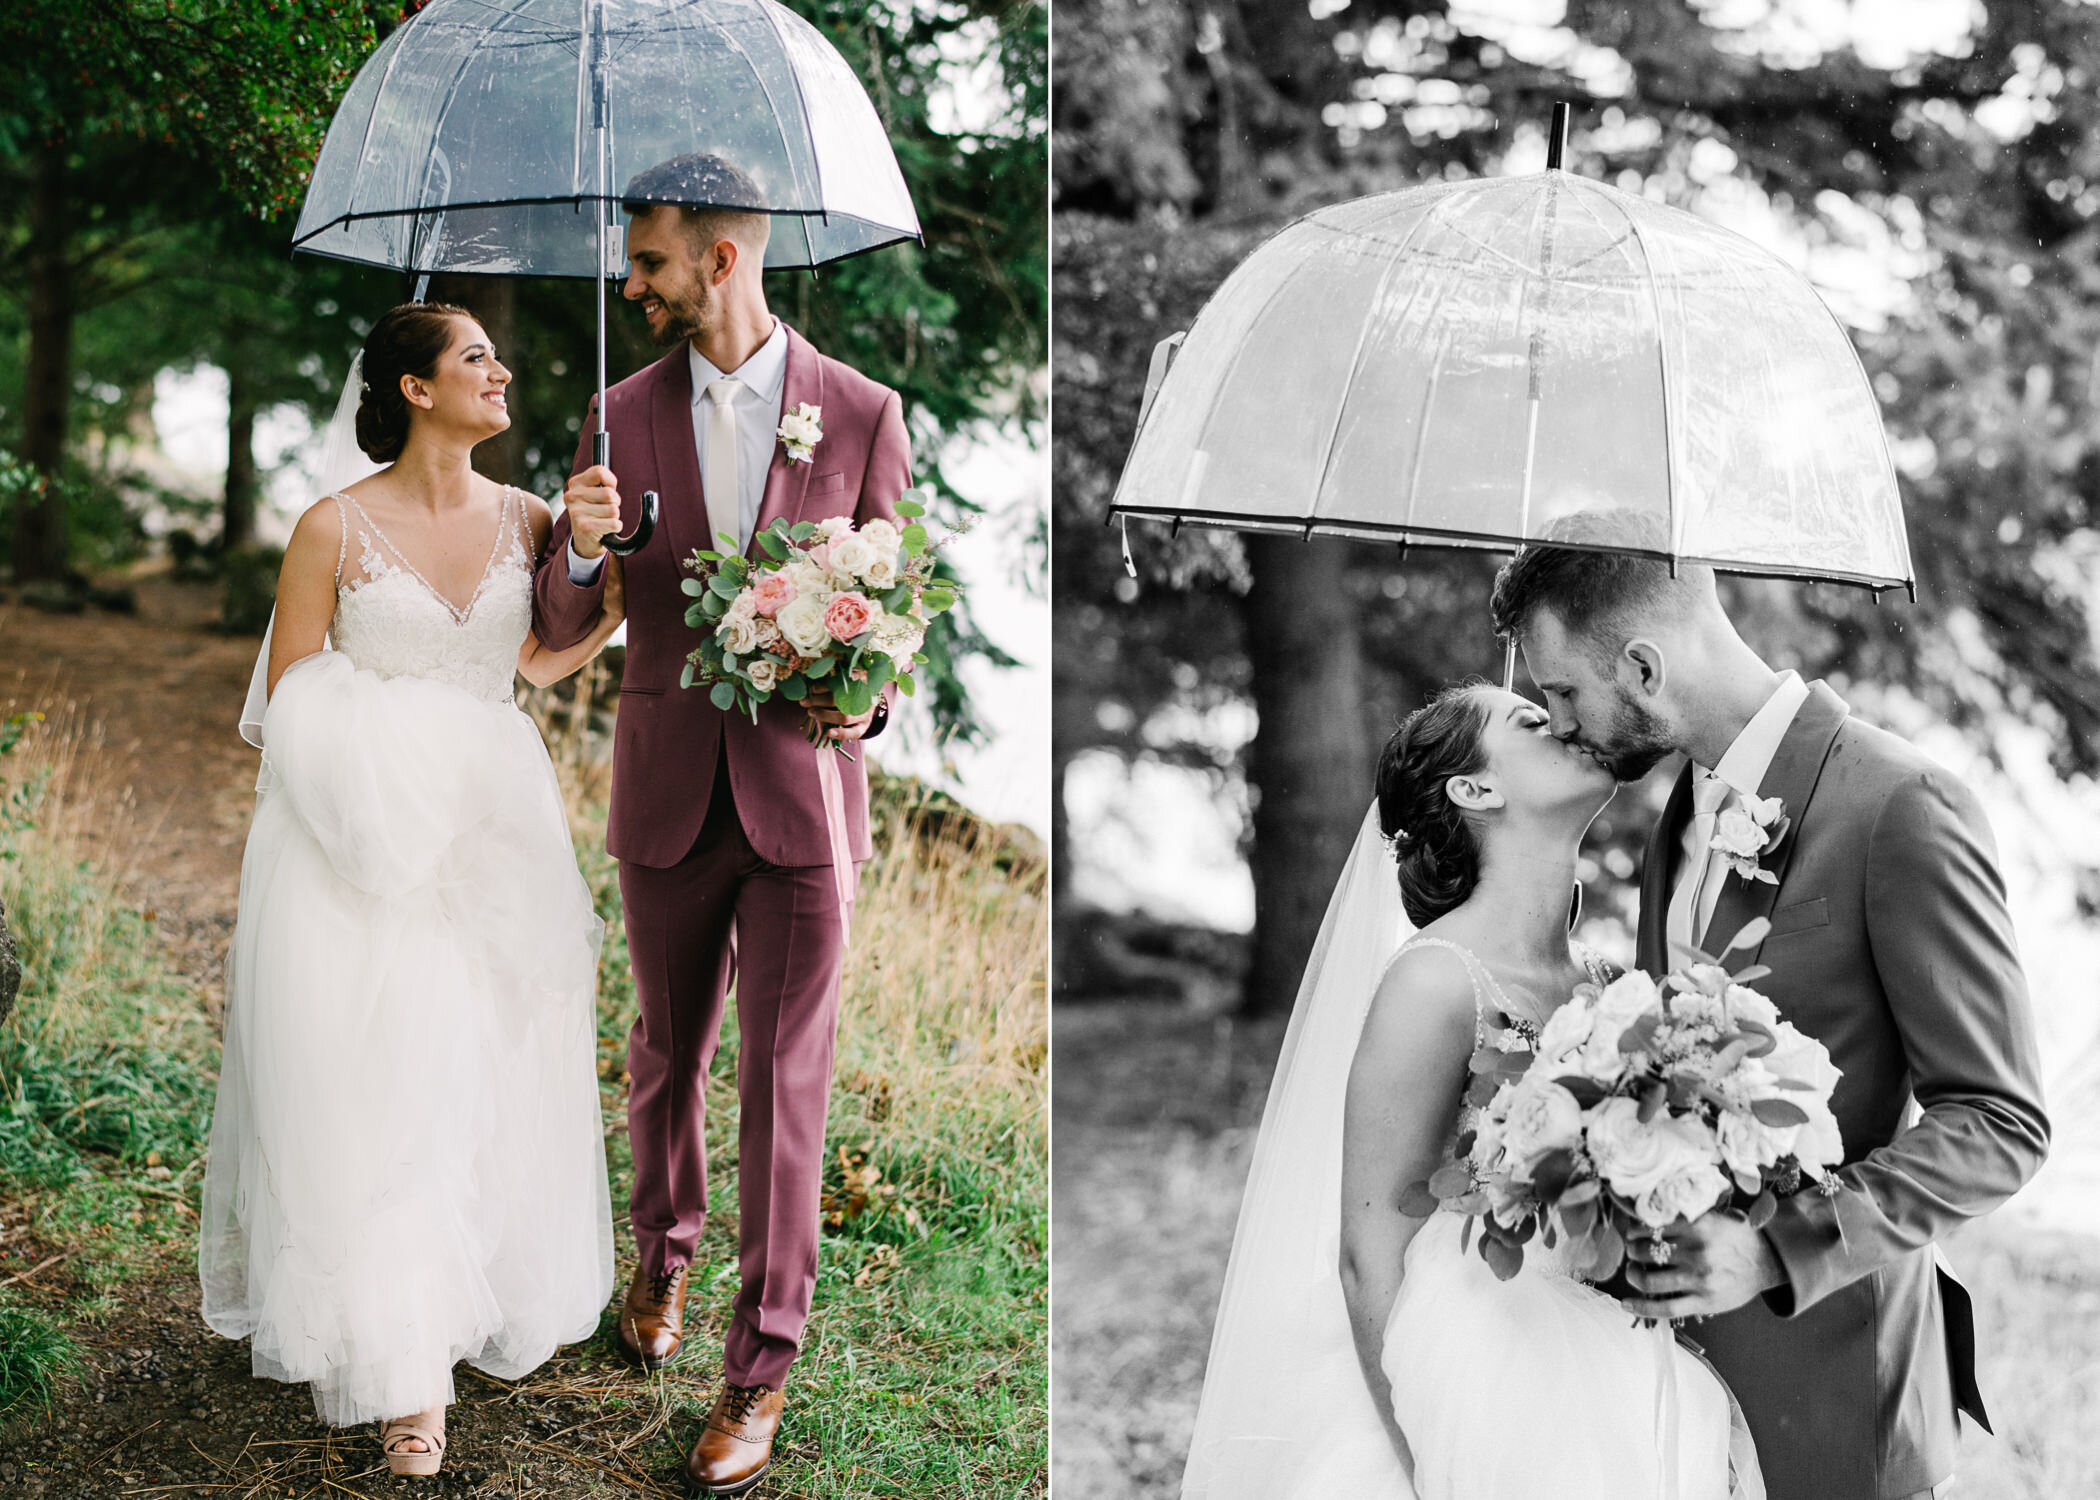  Walking under clear rain umbrella, bride and groom kiss 